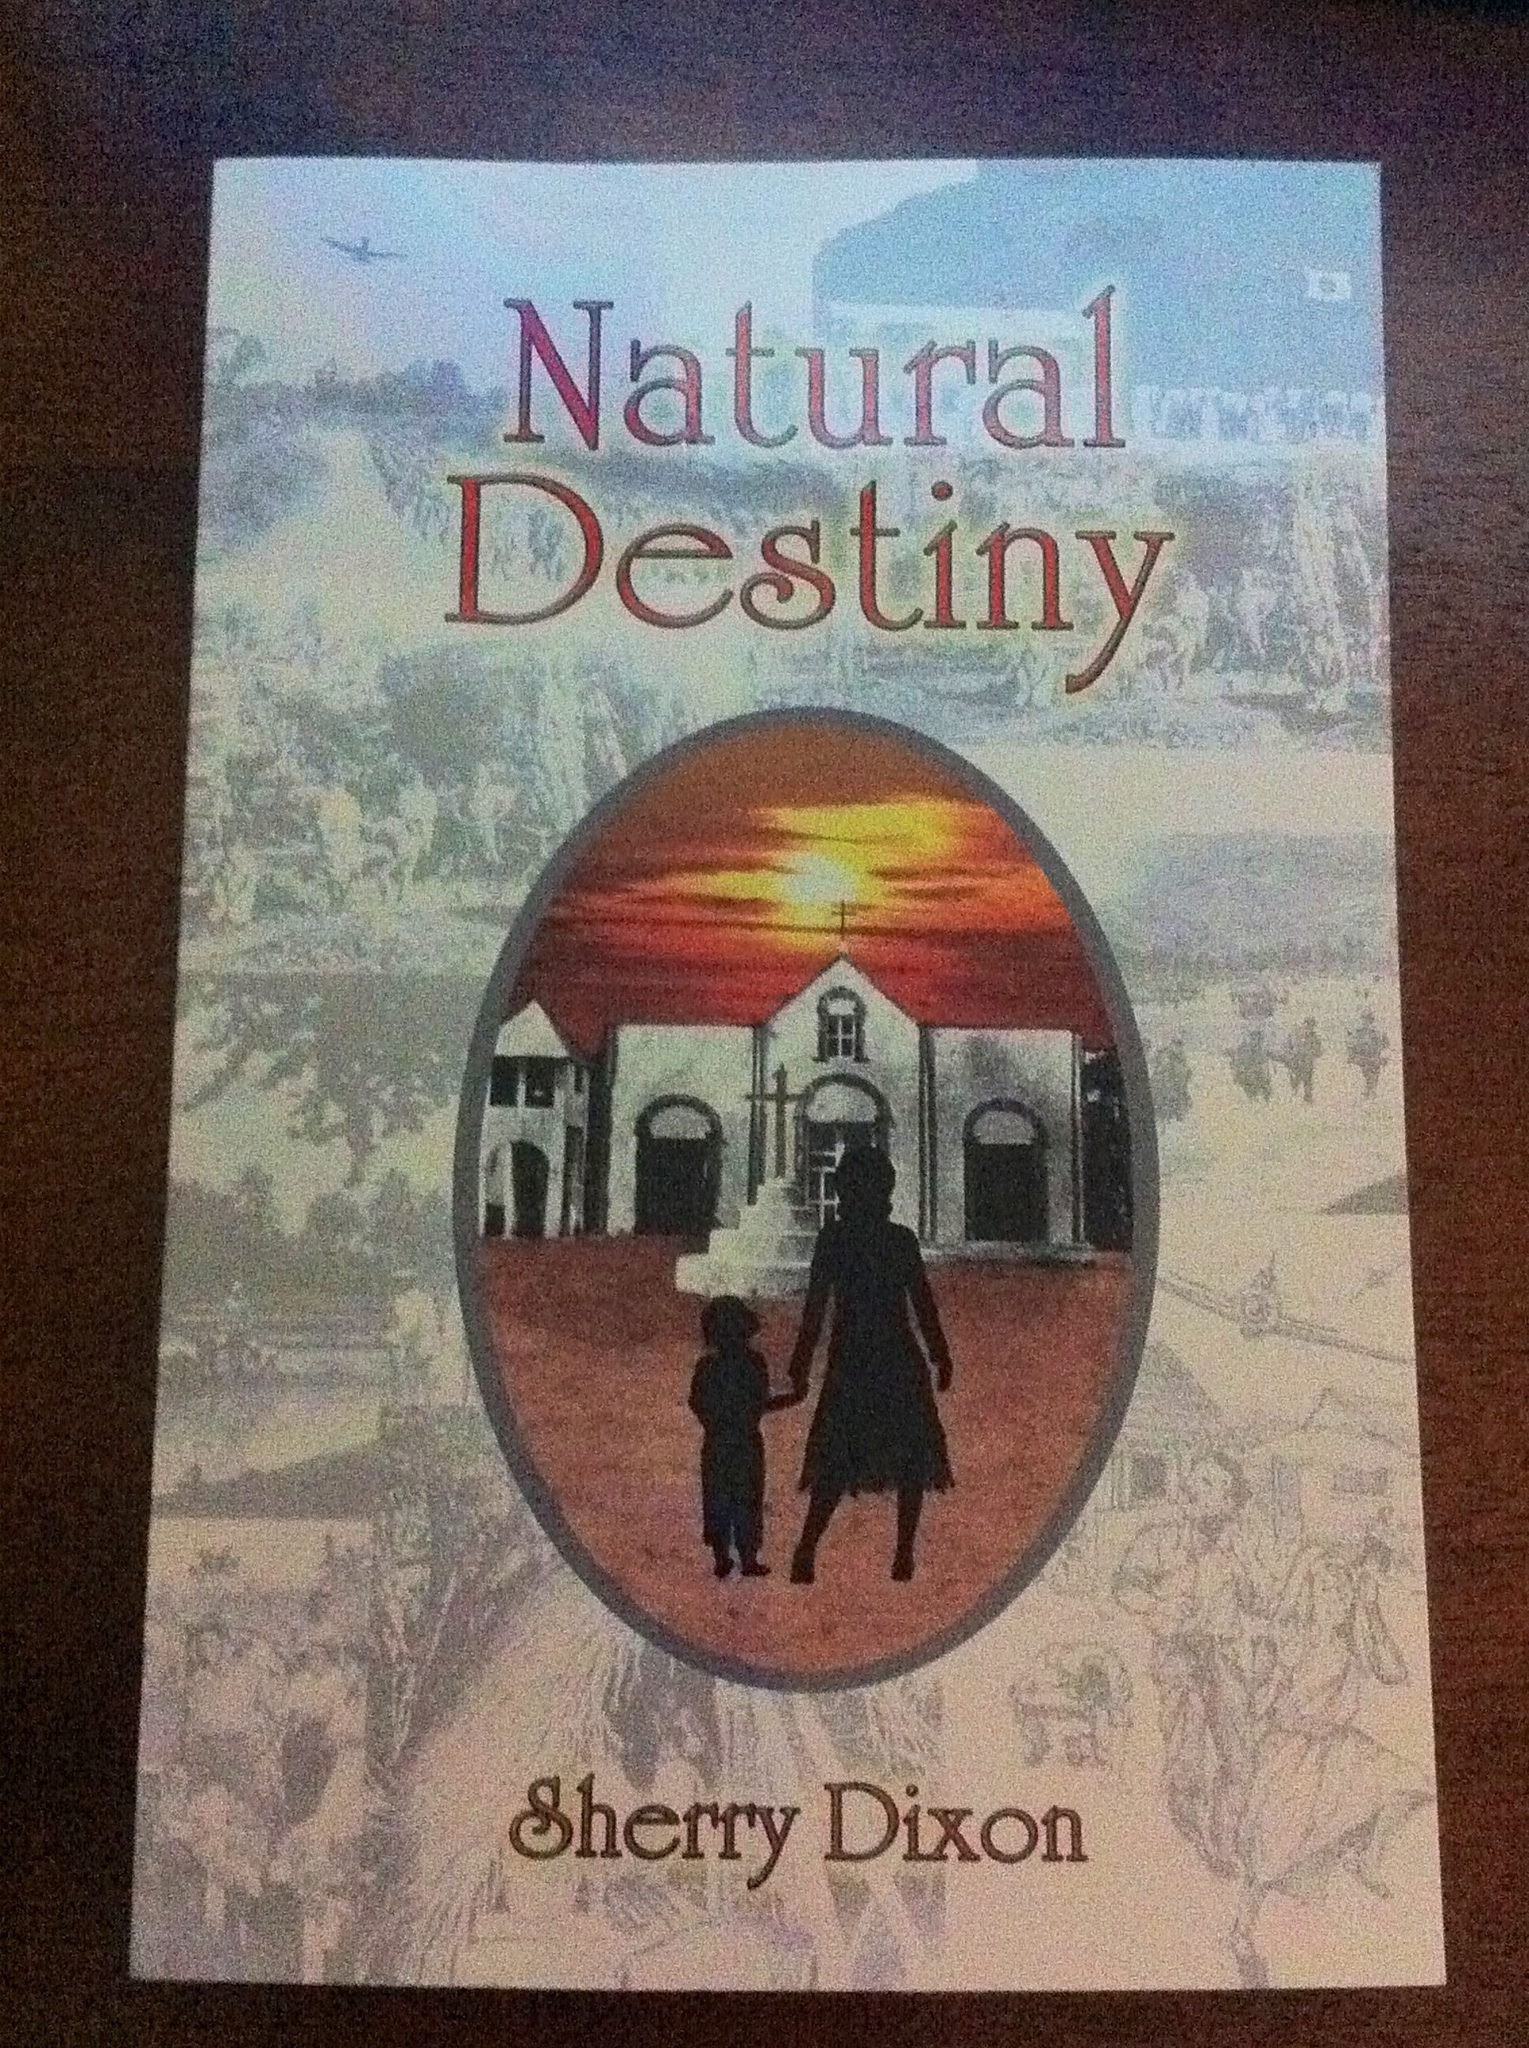 Natural Destiny by Sherry Dixon